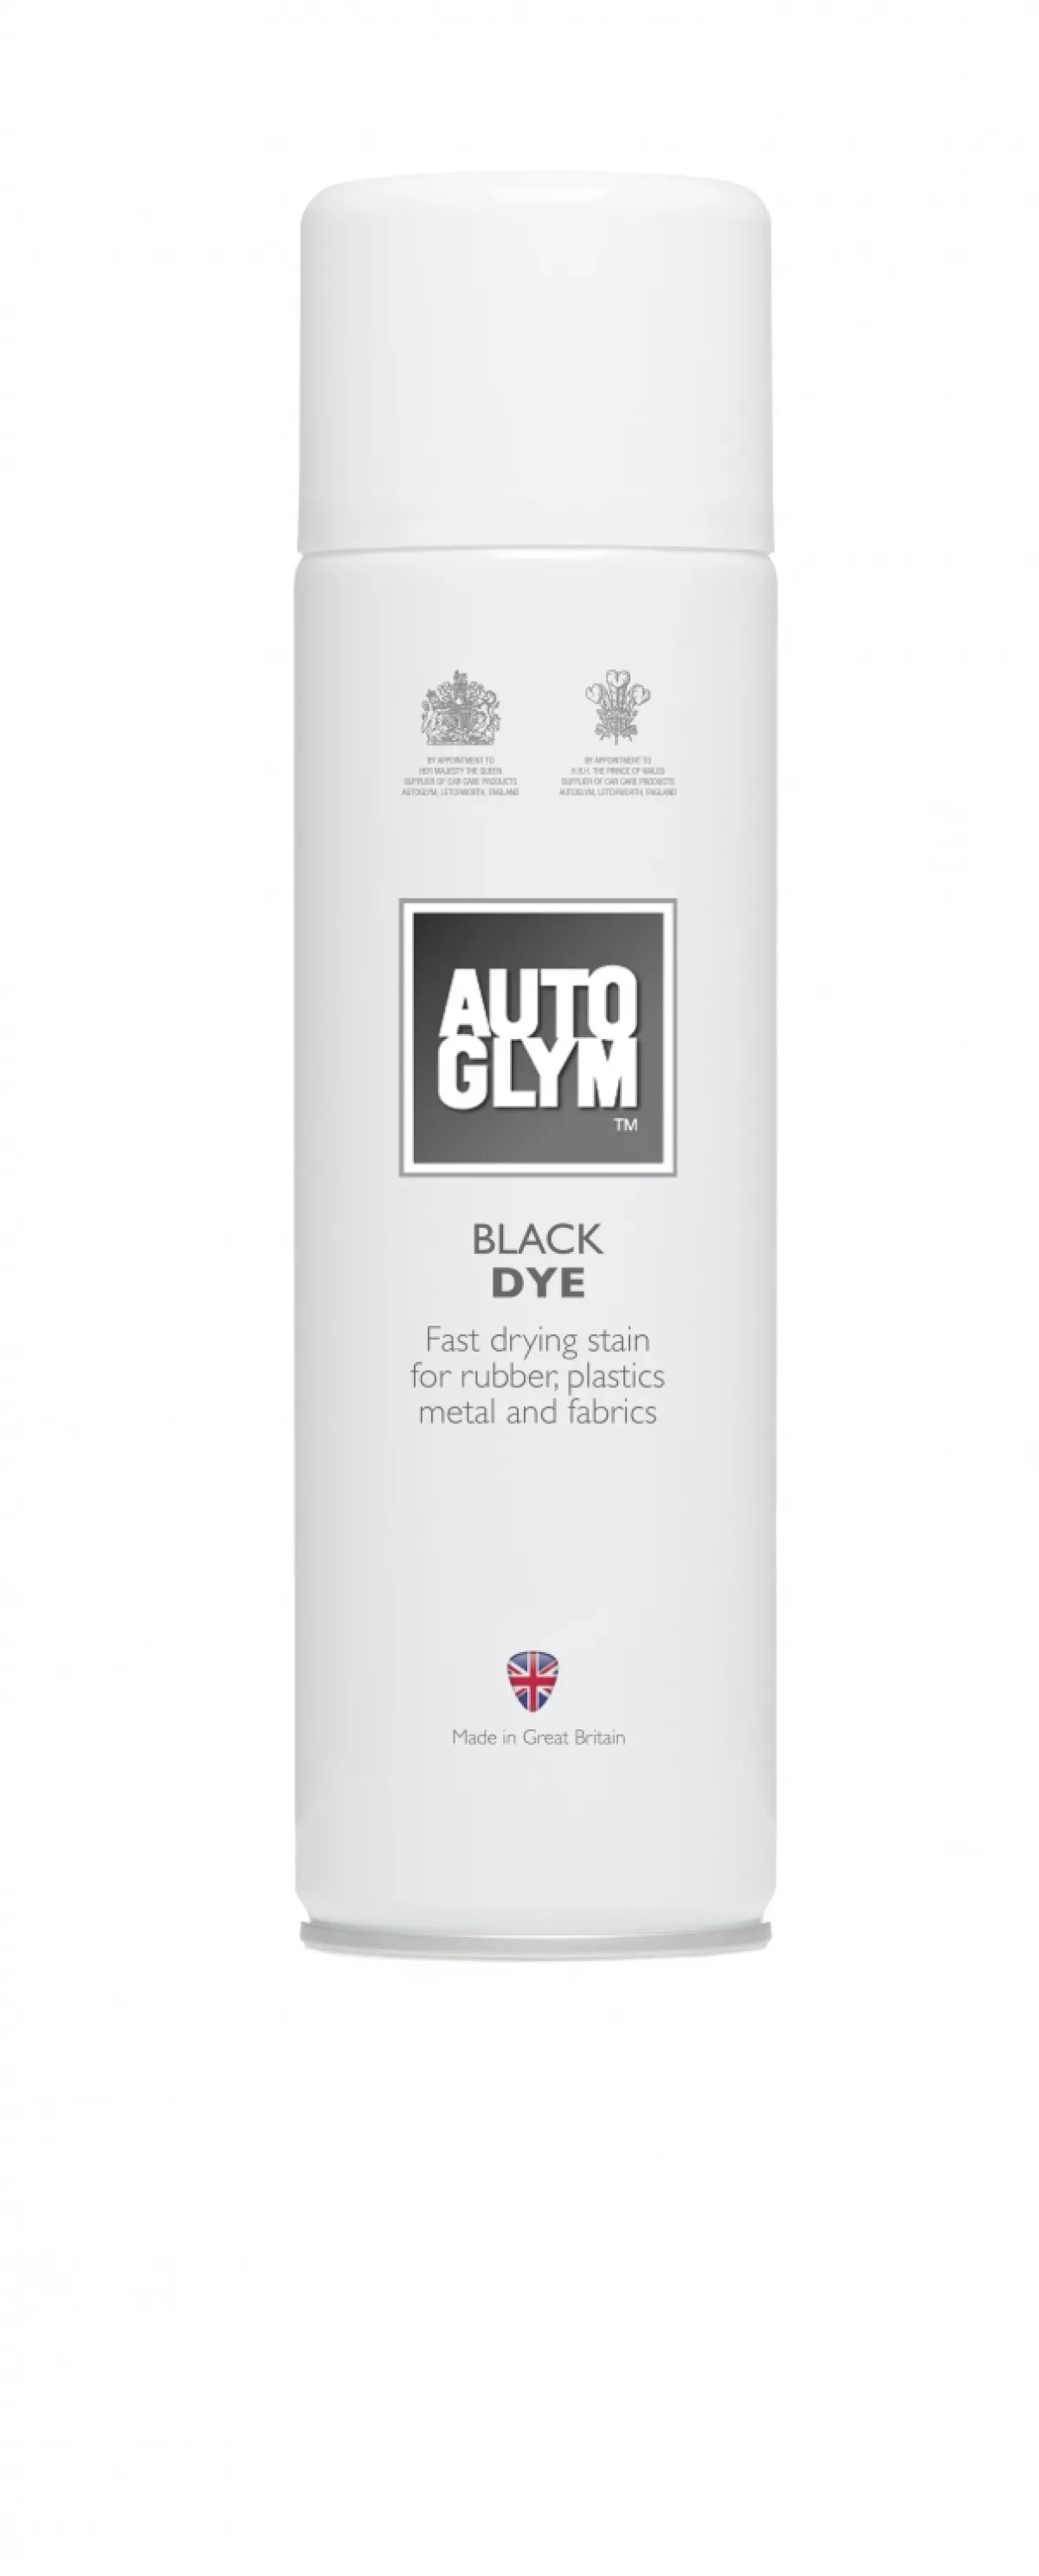 #2 - Autoglym TEKSTILFARVE SORT - Black Dye Spray - 500 ml.